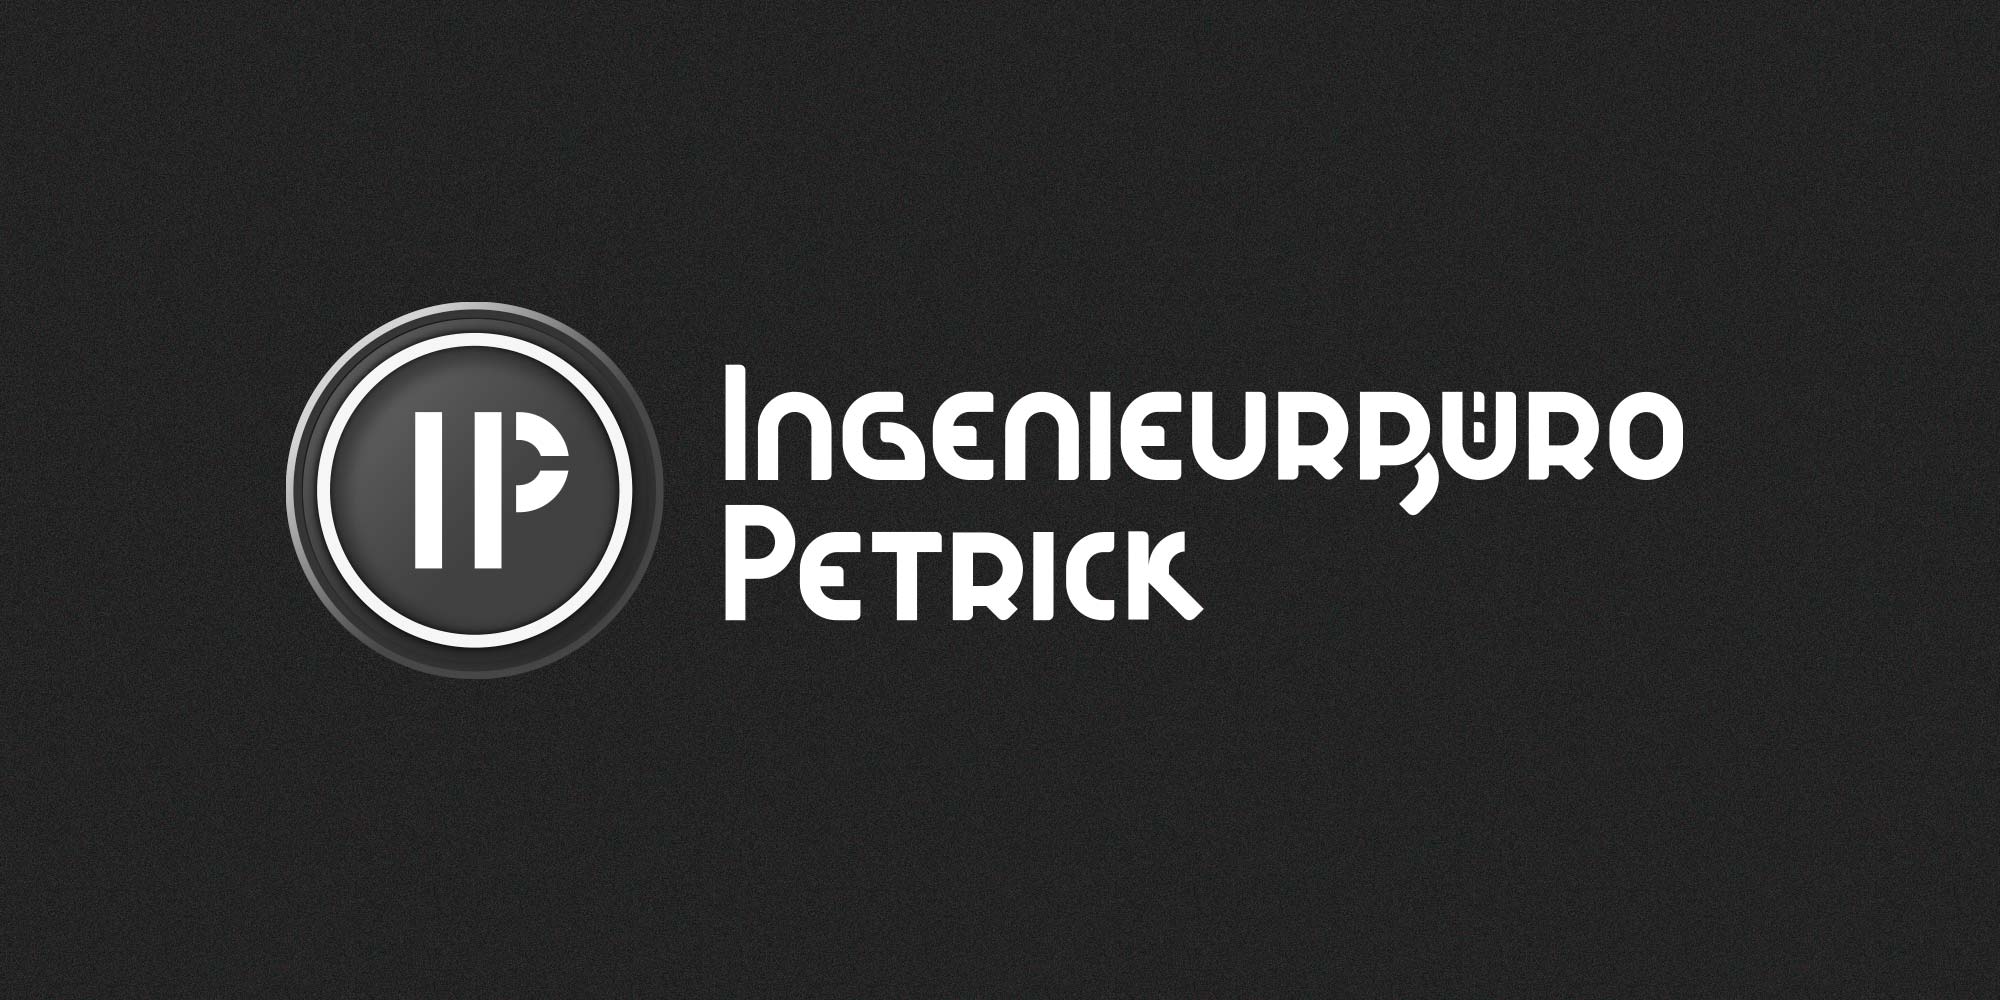 Ingenieurbüro Petrick from Cottbus - corporate design development including logo development